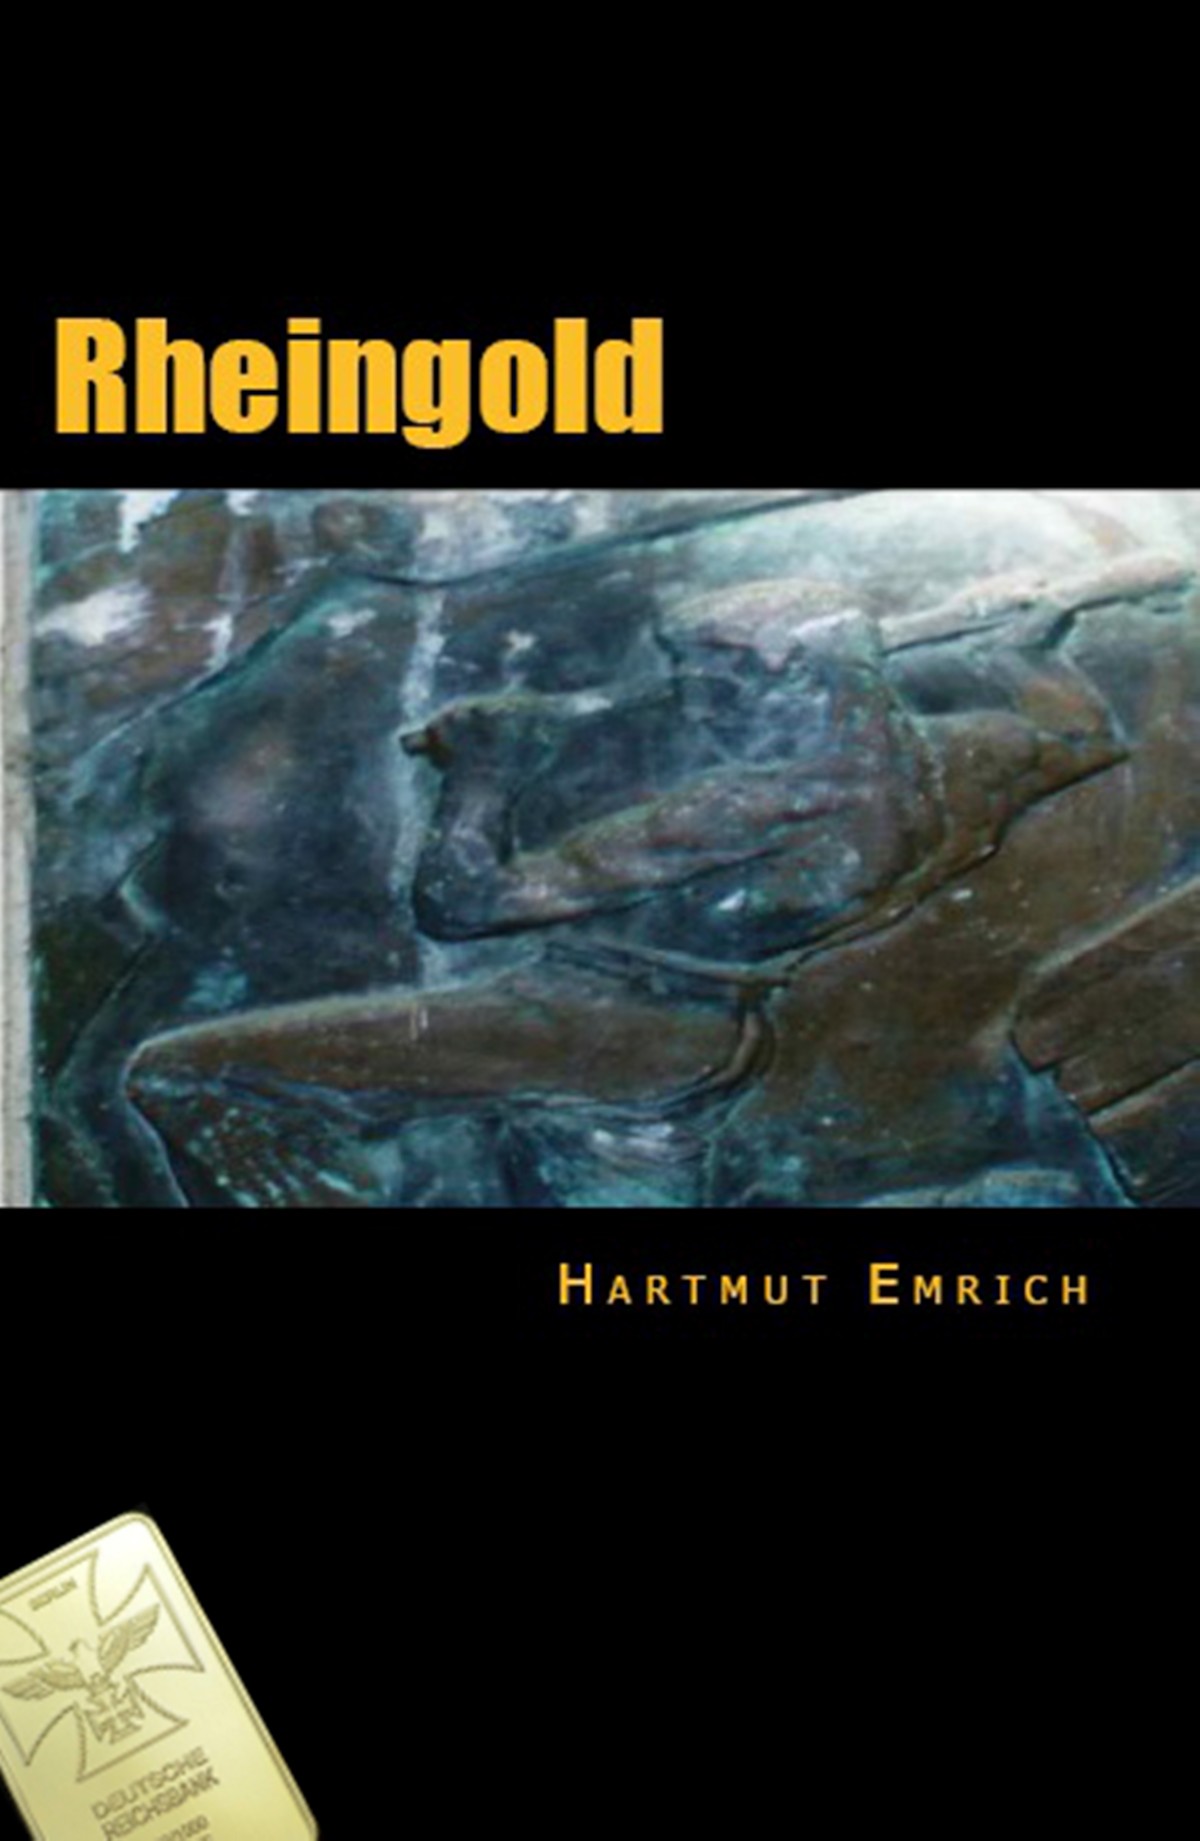 Hartmut Emrich - Rheingold